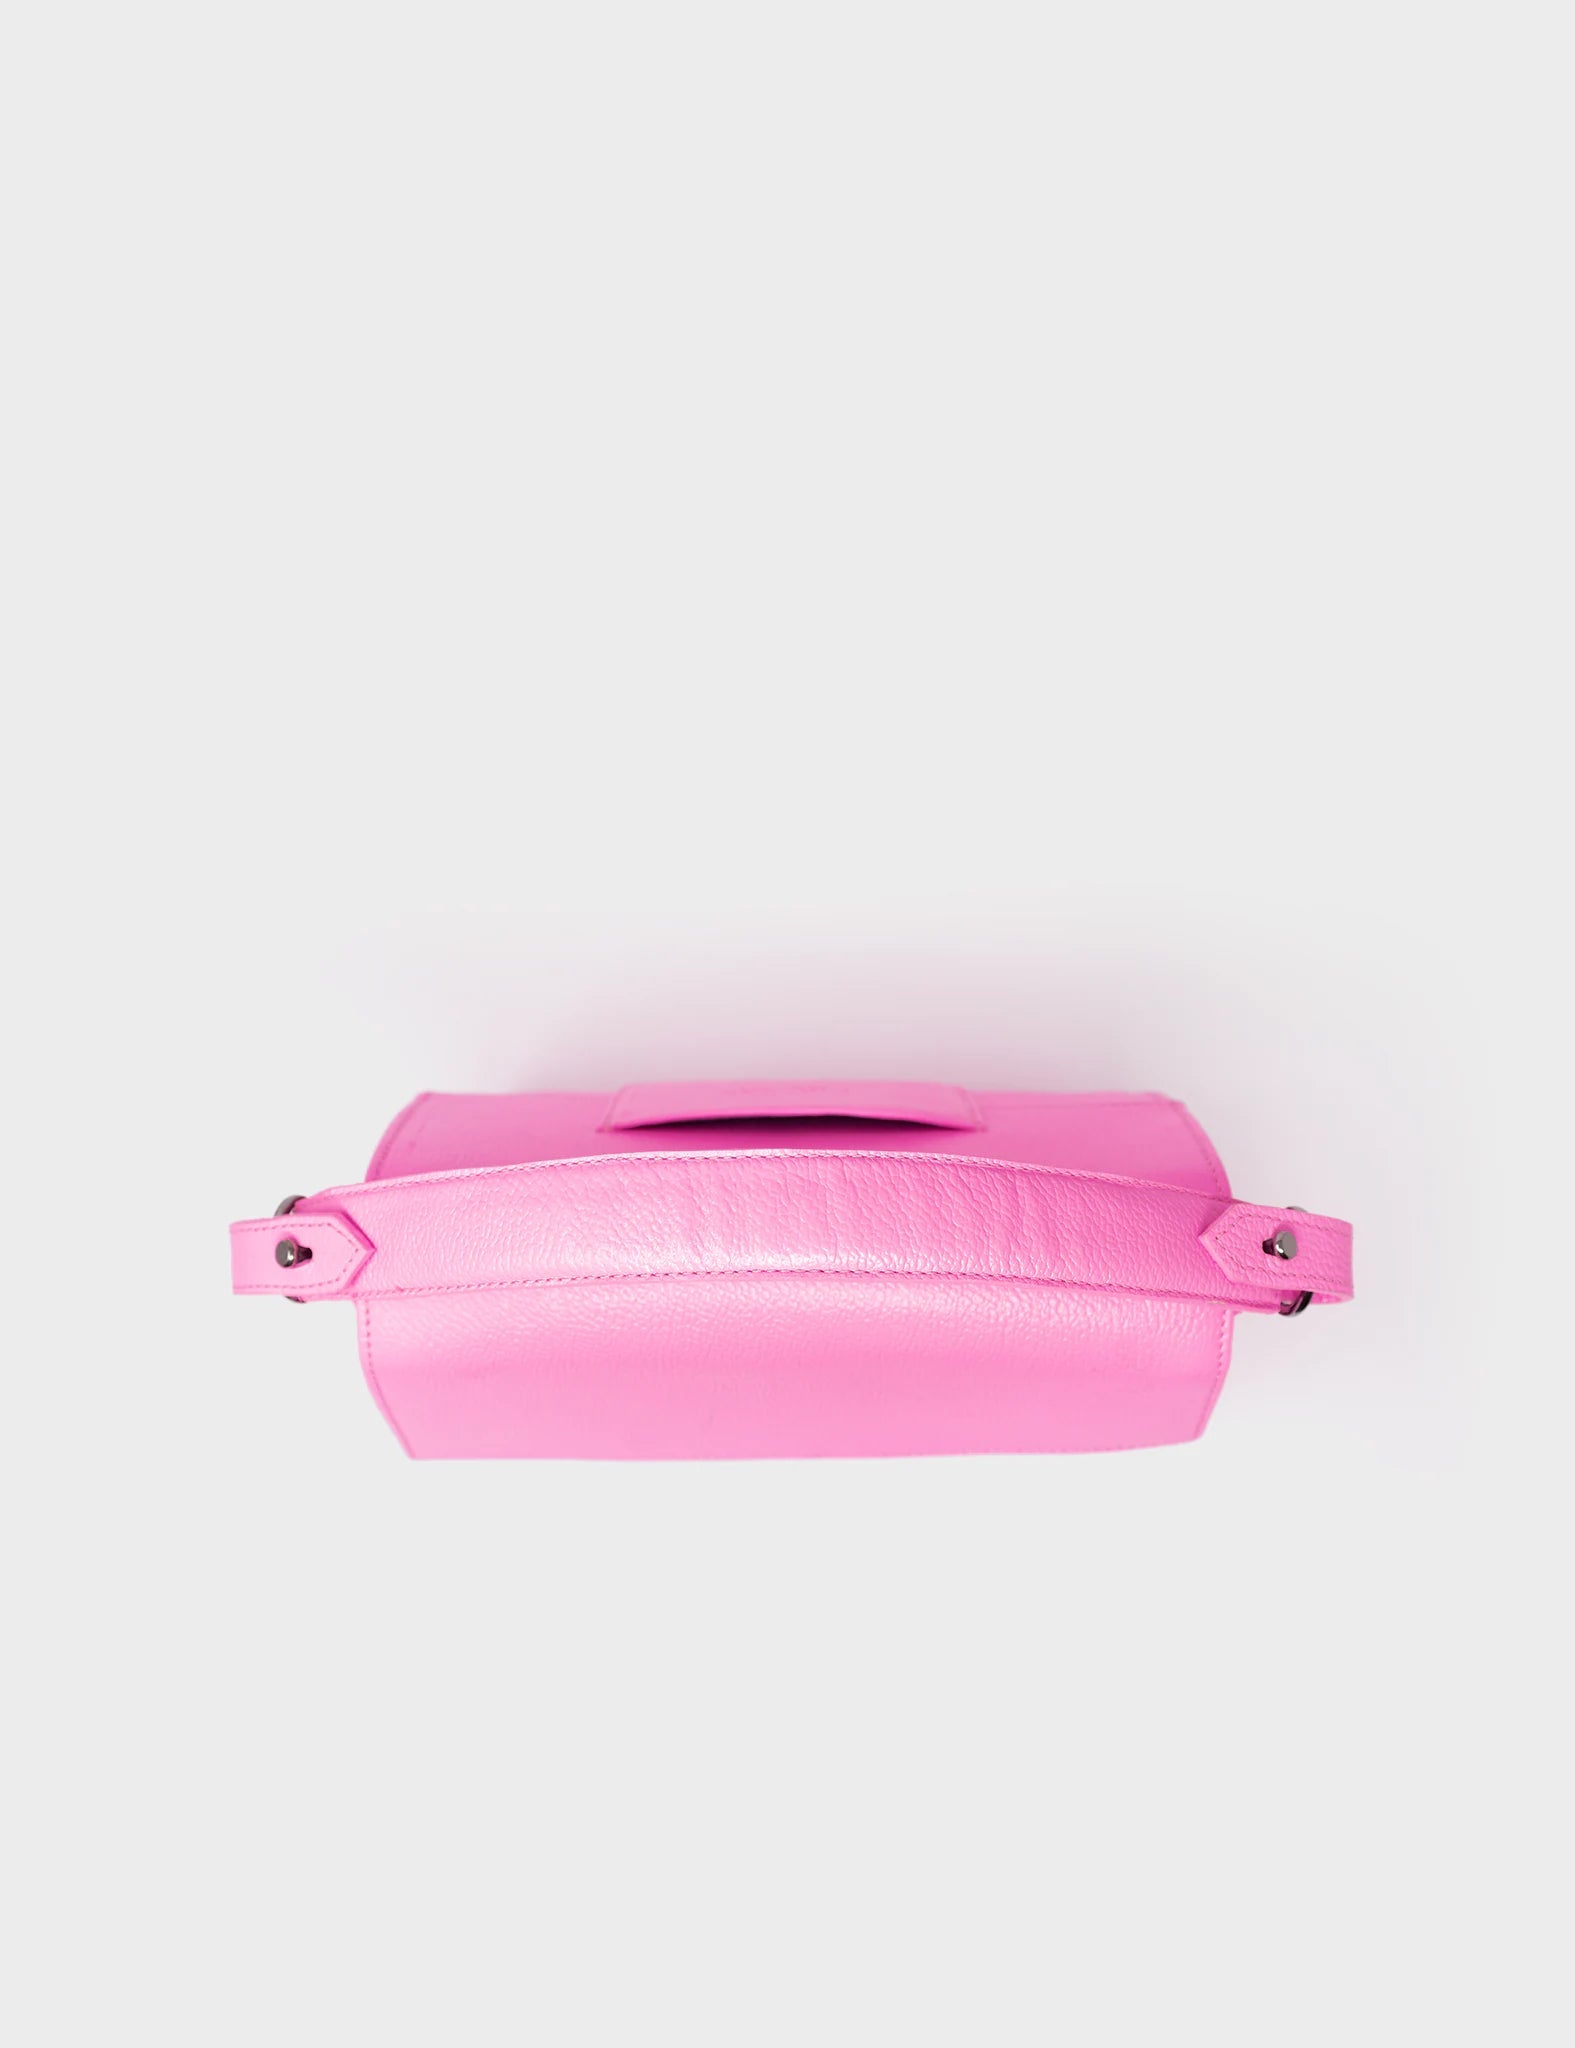 Anastasio Mini Crossbody Handbag Bubblegum Pink Leather - All Over Eyes Embroidery - Top view